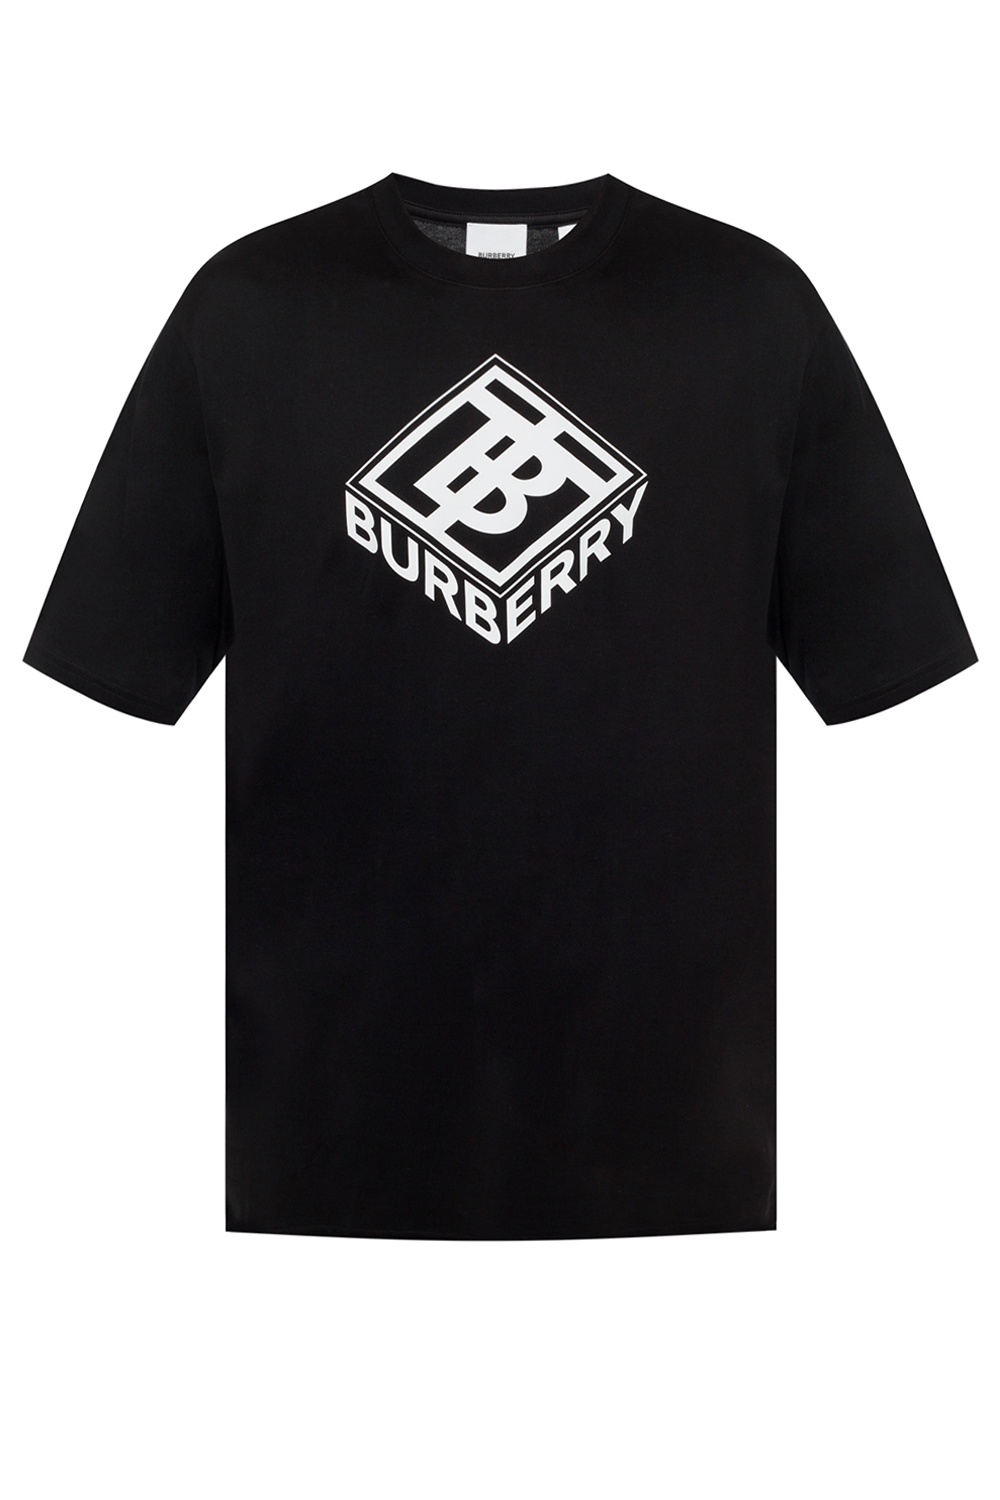 Burberry Logo T-shirt | Men's Clothing | Vitkac